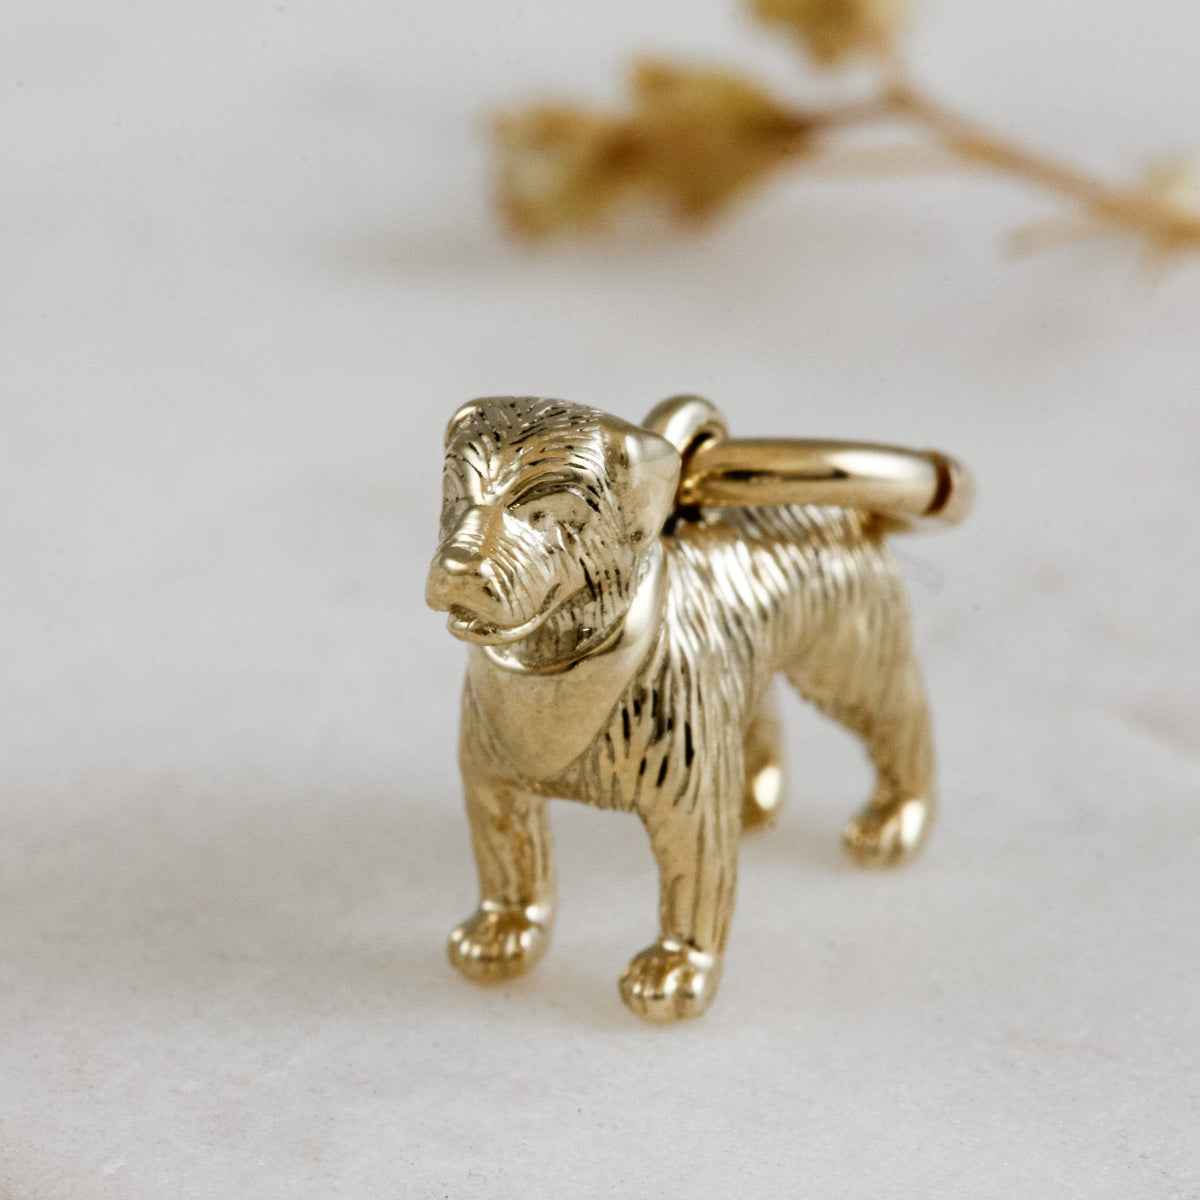 solid gold border terrier dog charm for a necklace or bracelet